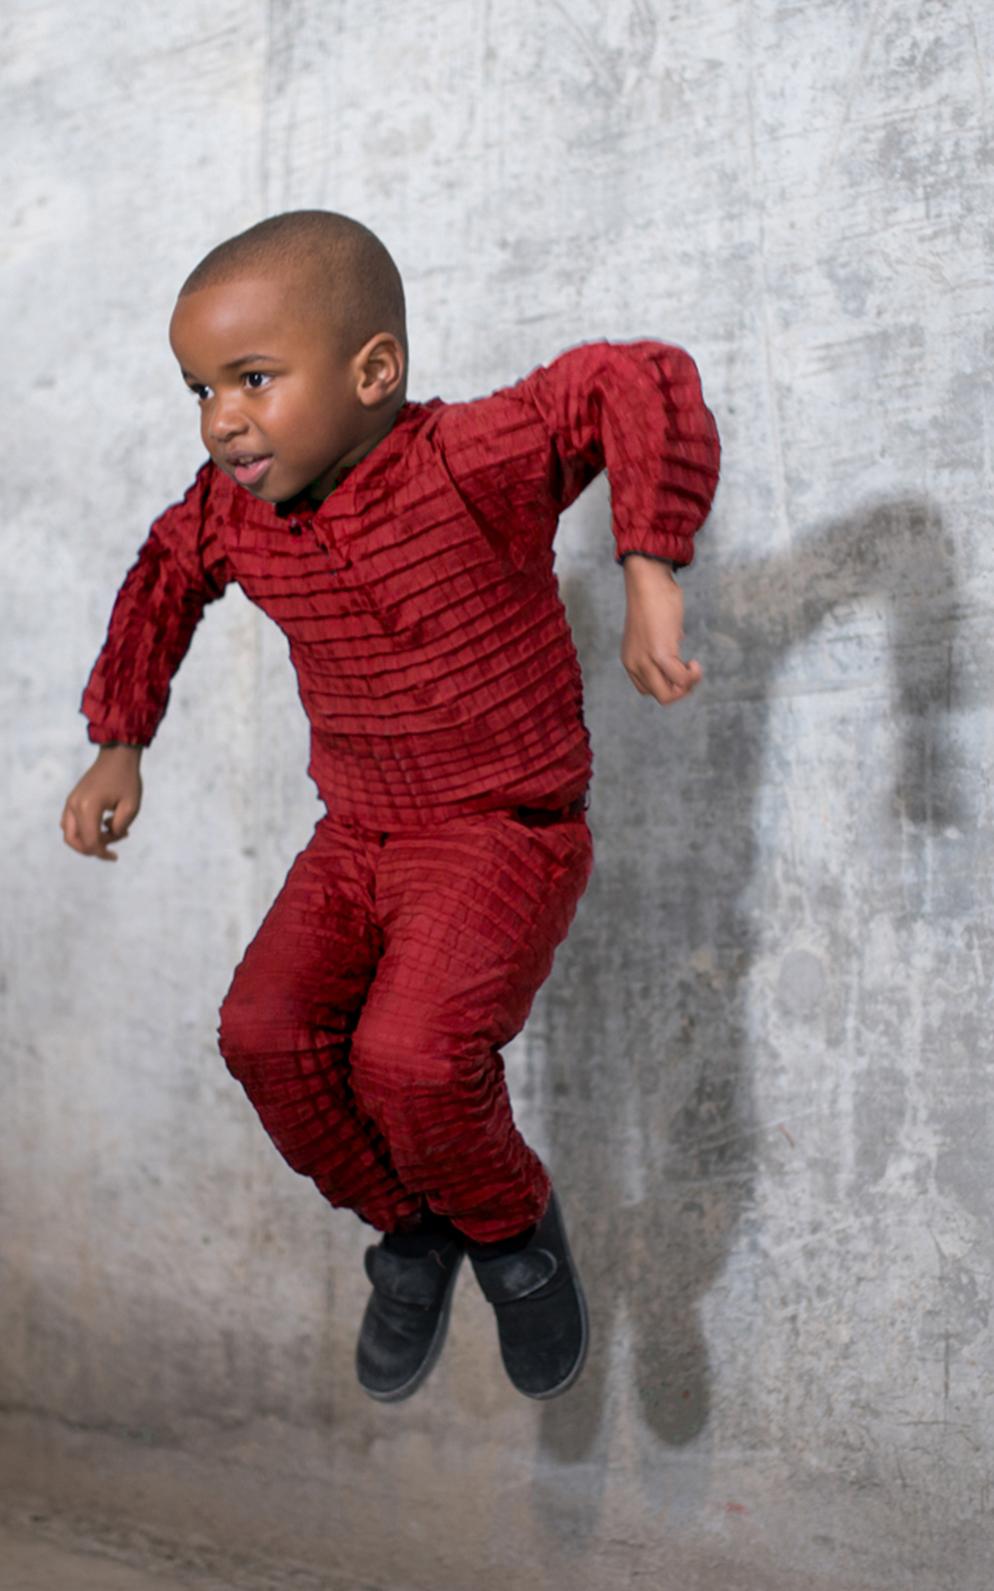 Beautiful News-Kid jumping with red pajamas on.